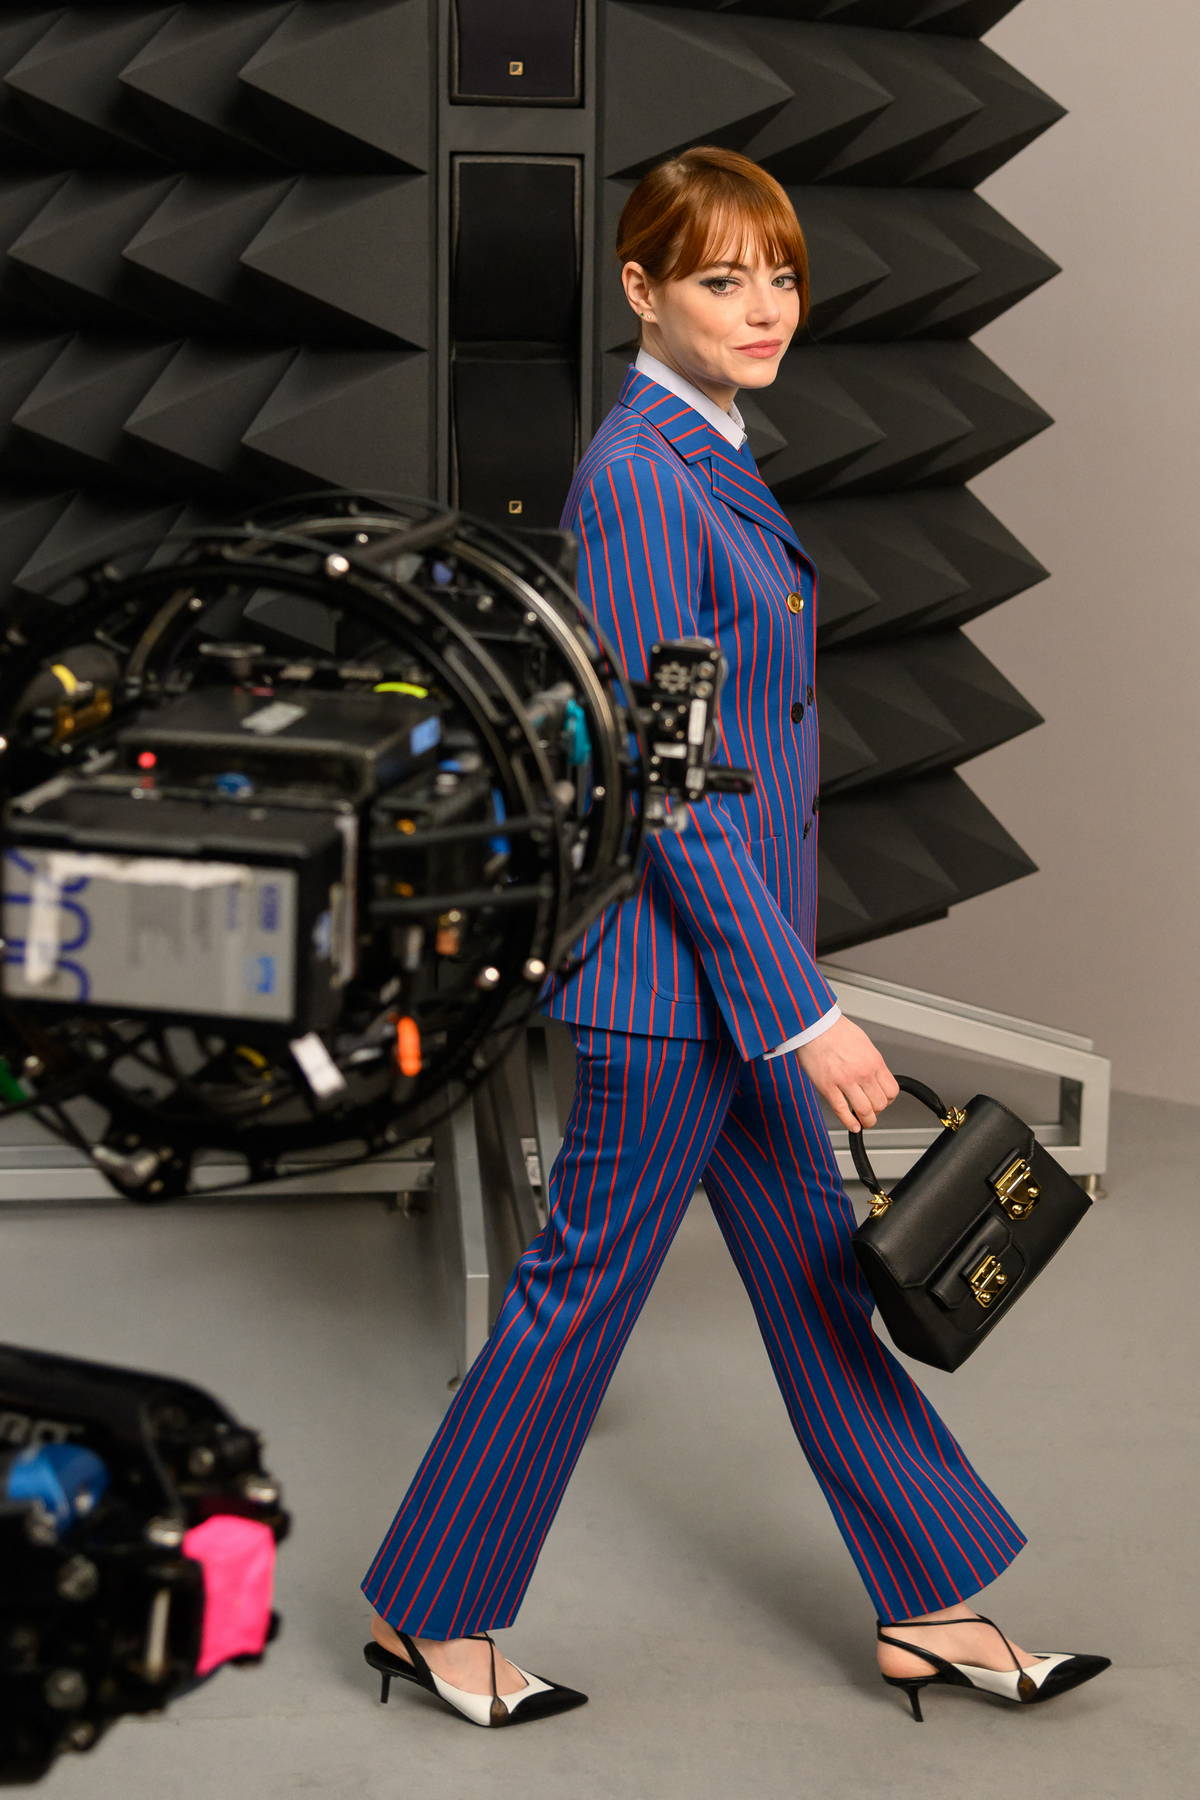 Emma, Louis Vuitton 2023 Campaign Photoshoot